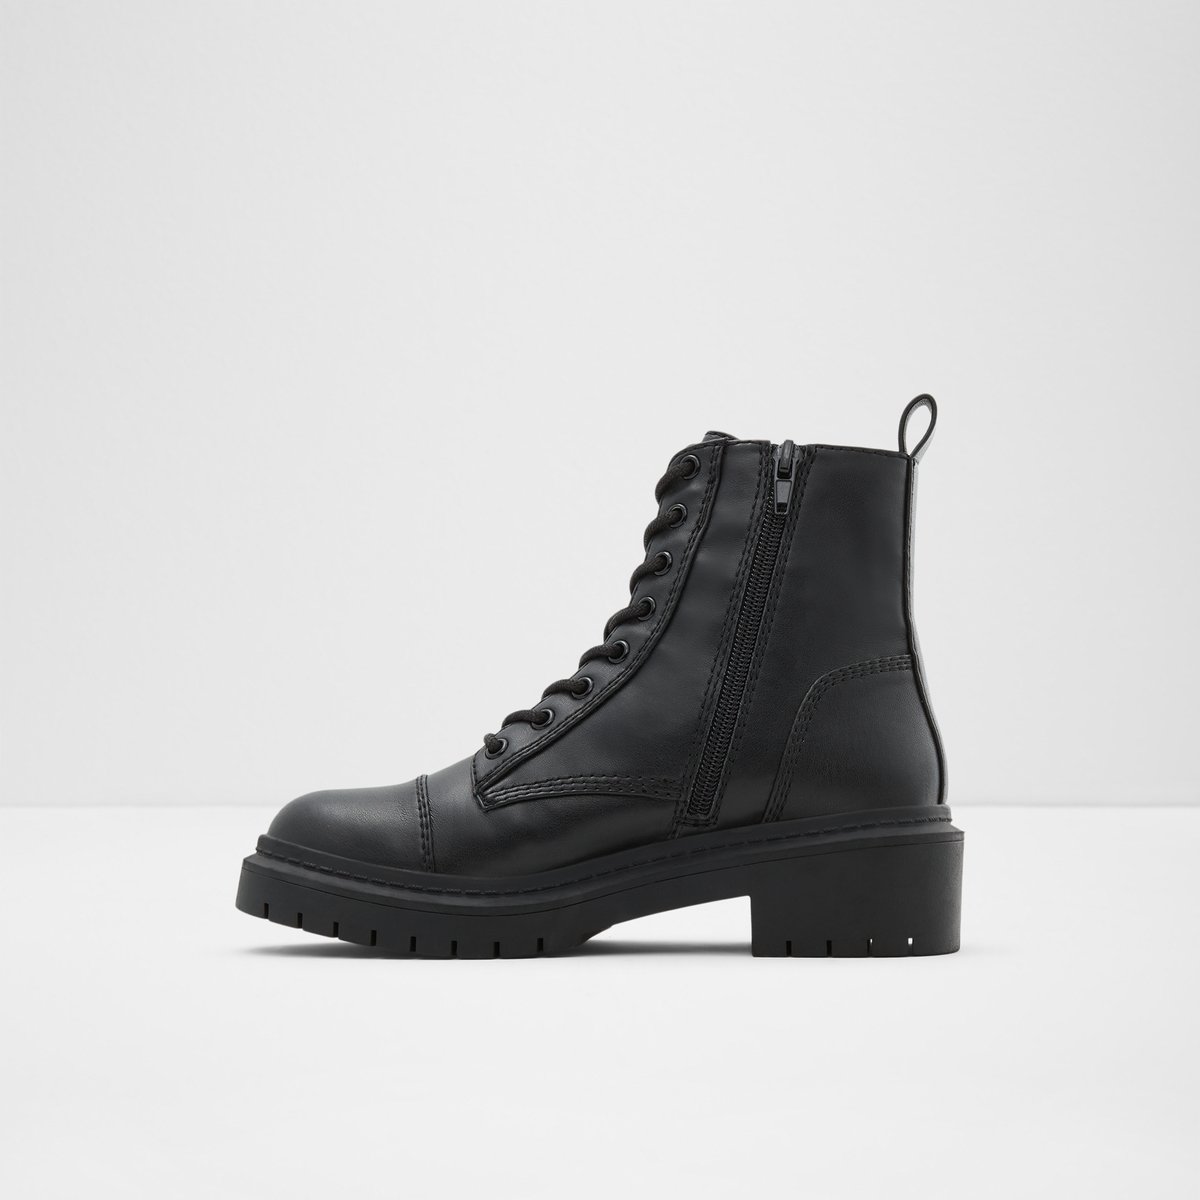 Goer Black boots ALDO US